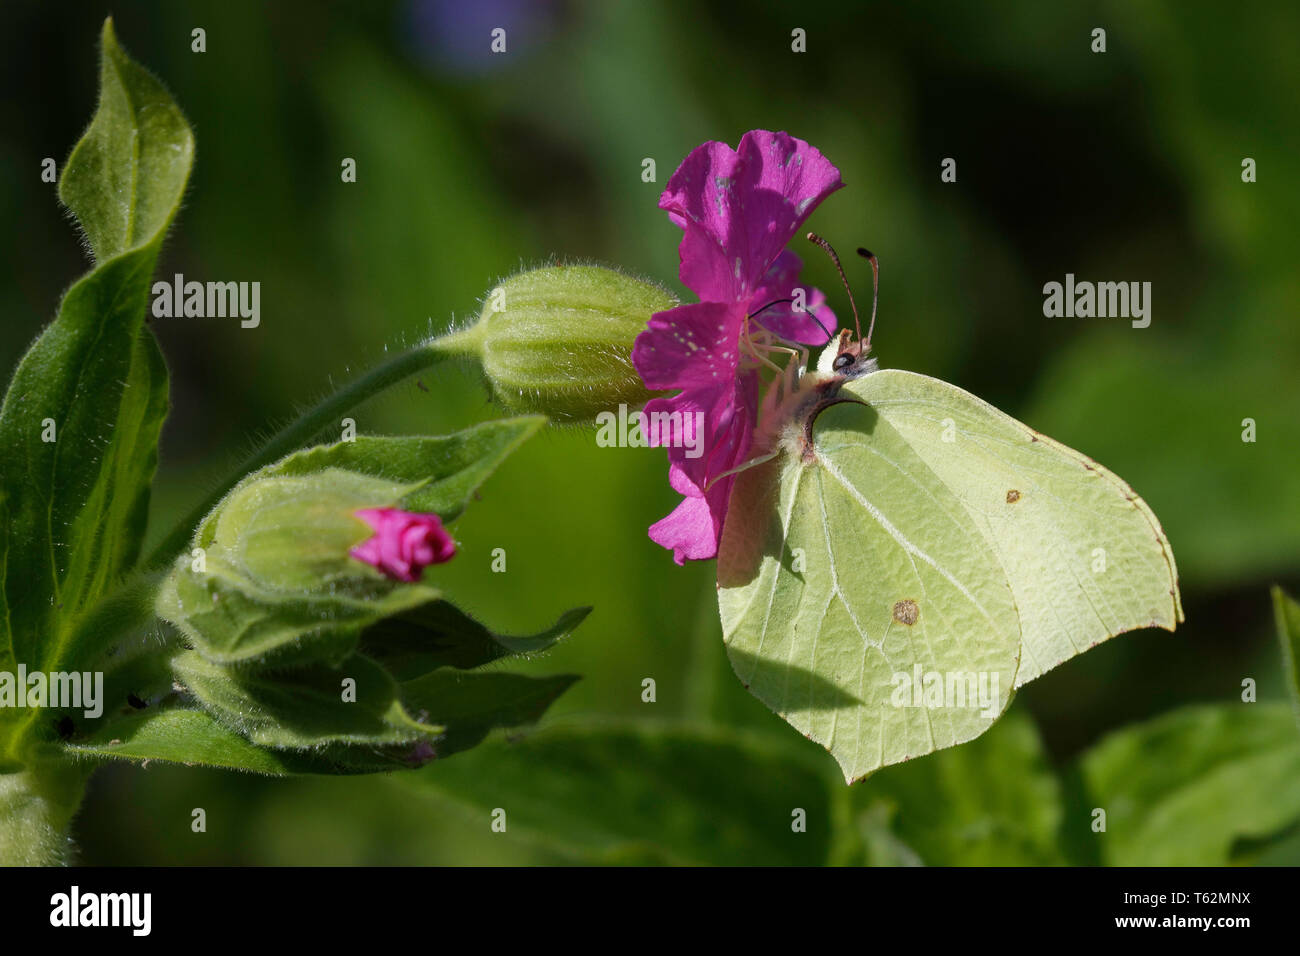 Brimstone Butterfly on Campion Flower Stock Photo